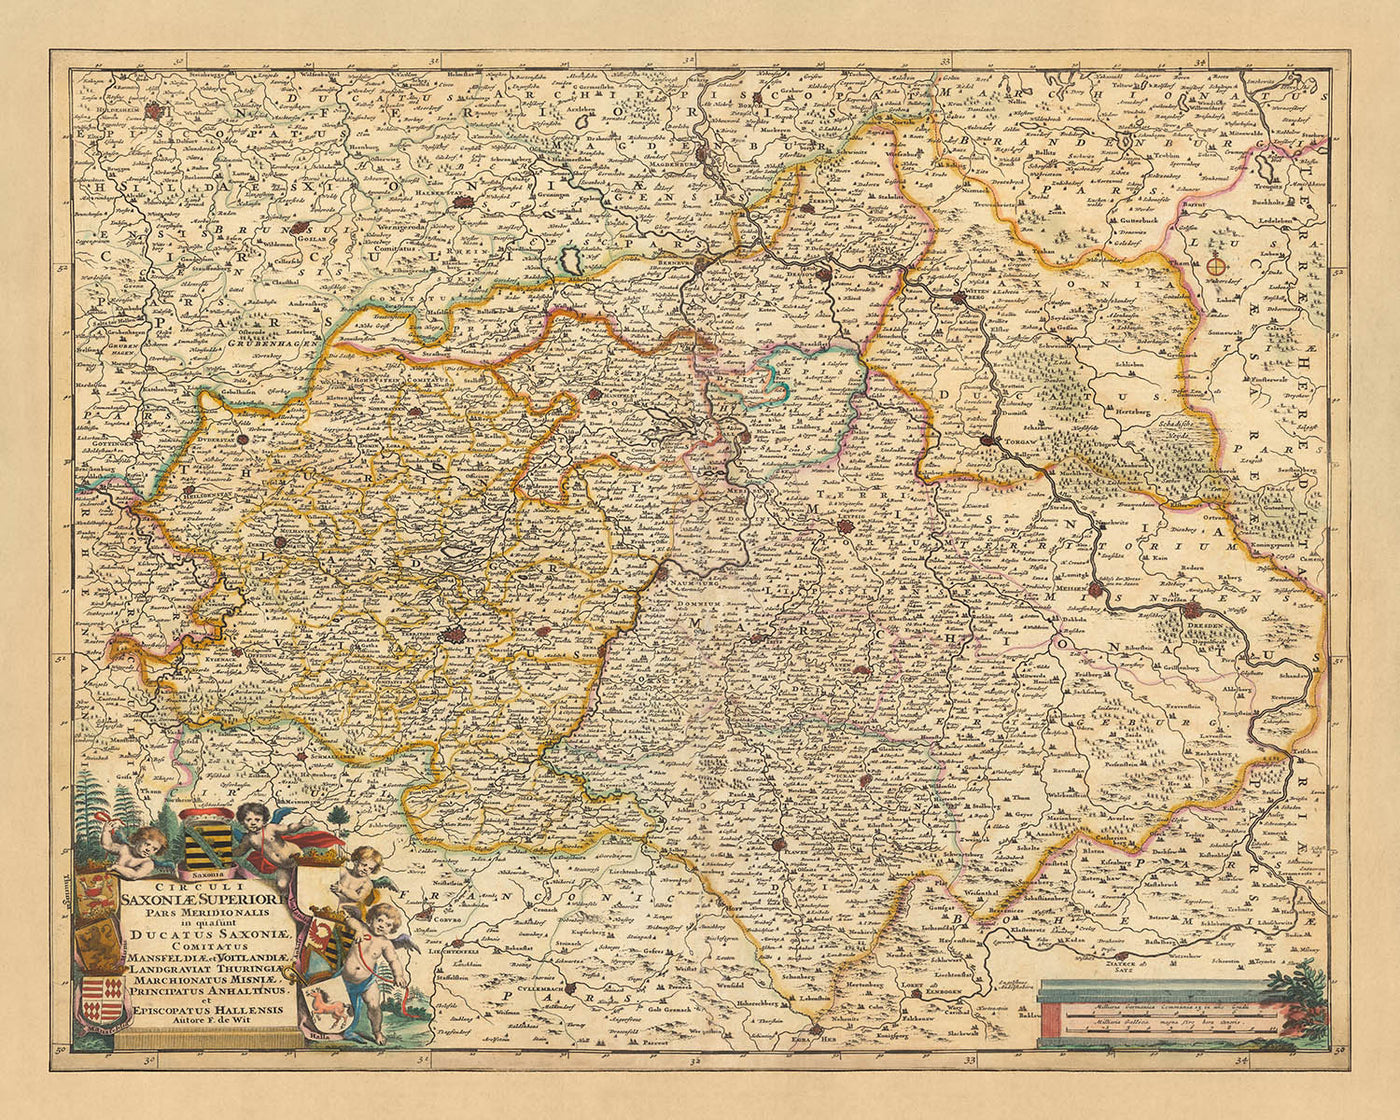 Old Map of Upper Saxony by Visscher, 1690: Leipzig, Dresden, Magdeburg, Halle (Saale), Erfurt